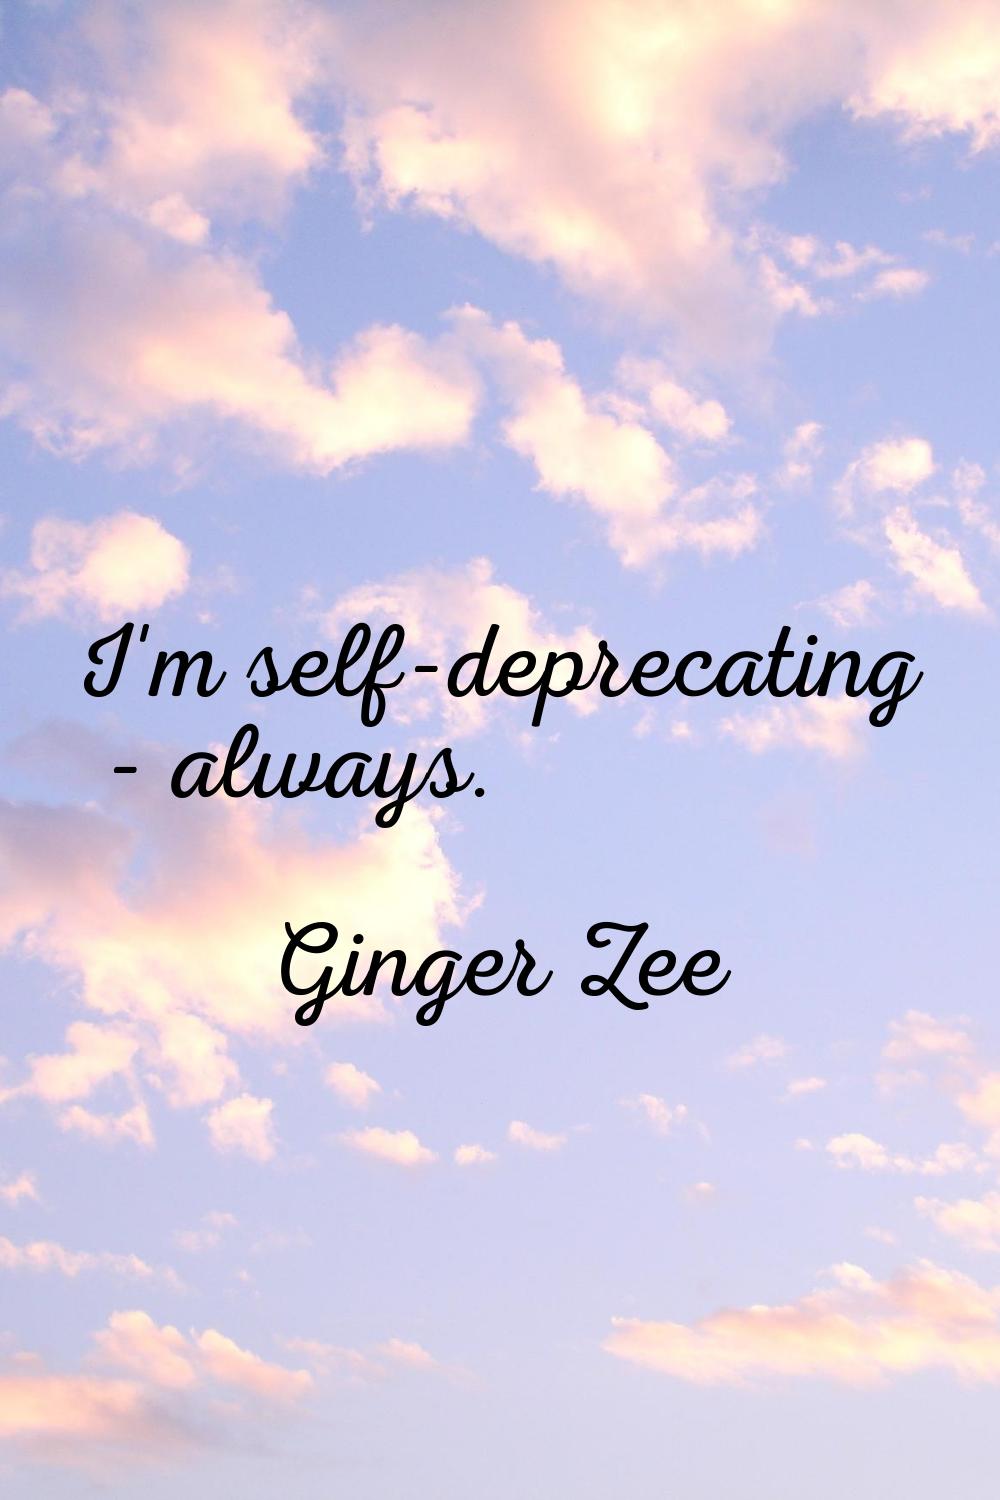 I'm self-deprecating - always.